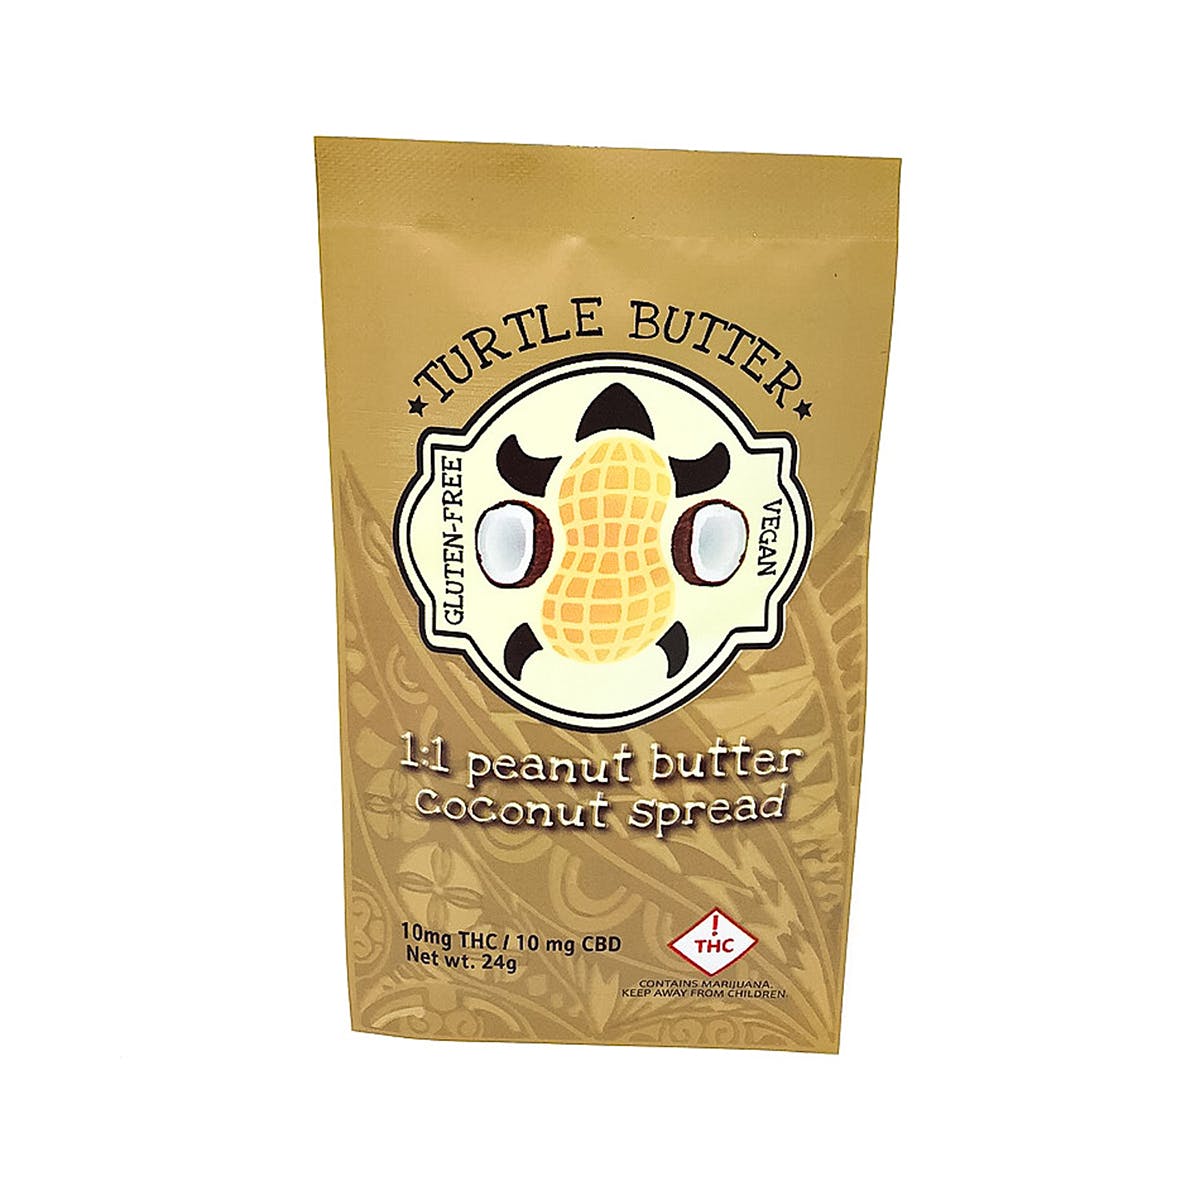 Peanut Butter Coconut Spread 1:1 THC/CBD